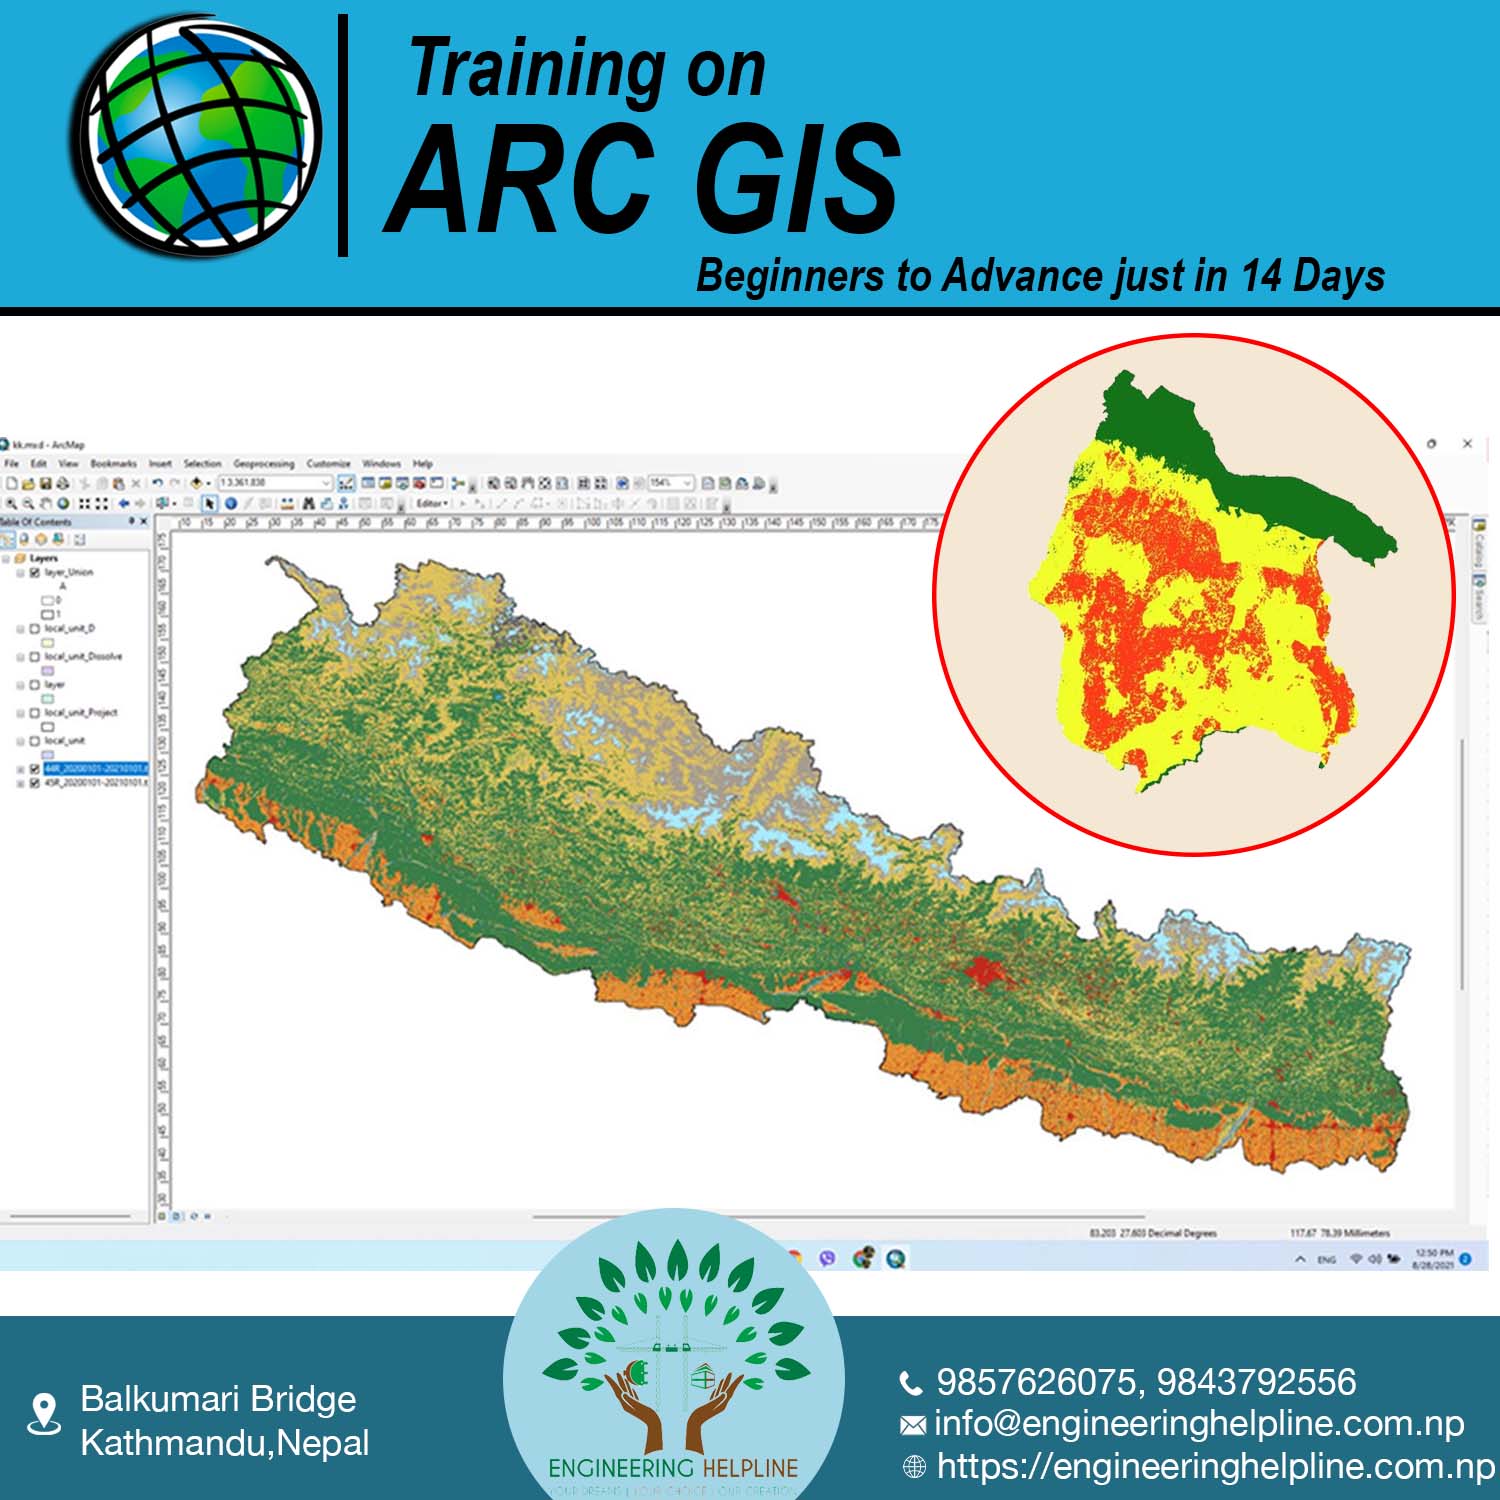 Training on "Arc GIS"